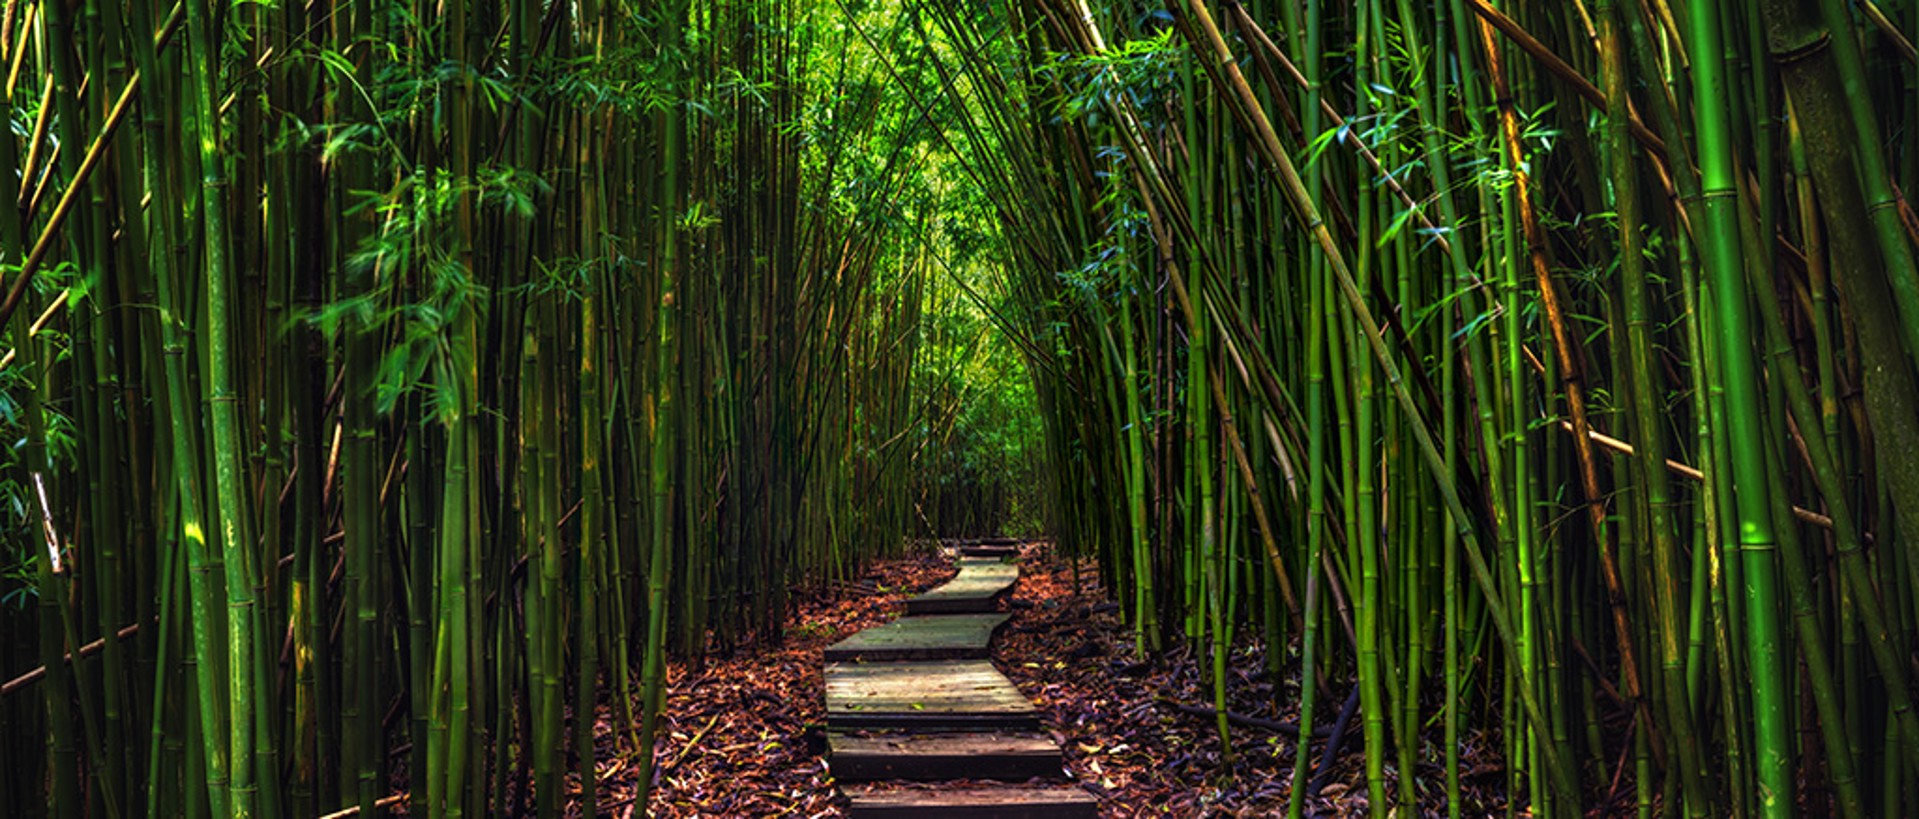 Bamboo Zen Pathway by Bryan Pezman